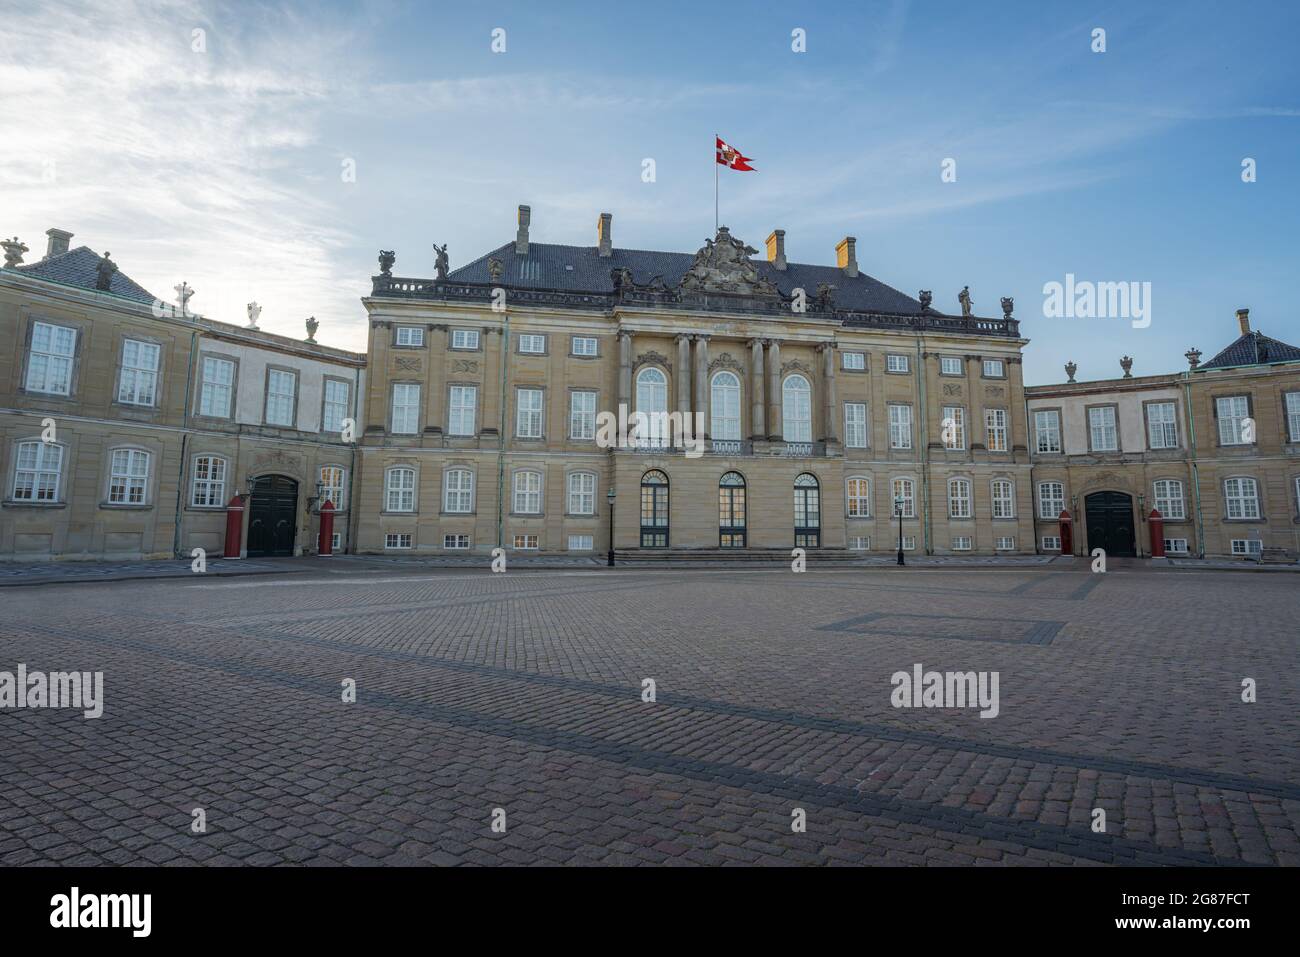 Amalienborg Palace - Christian VIII's Palace with the Royal House Standard - Copenhagen, Denmark Stock Photo